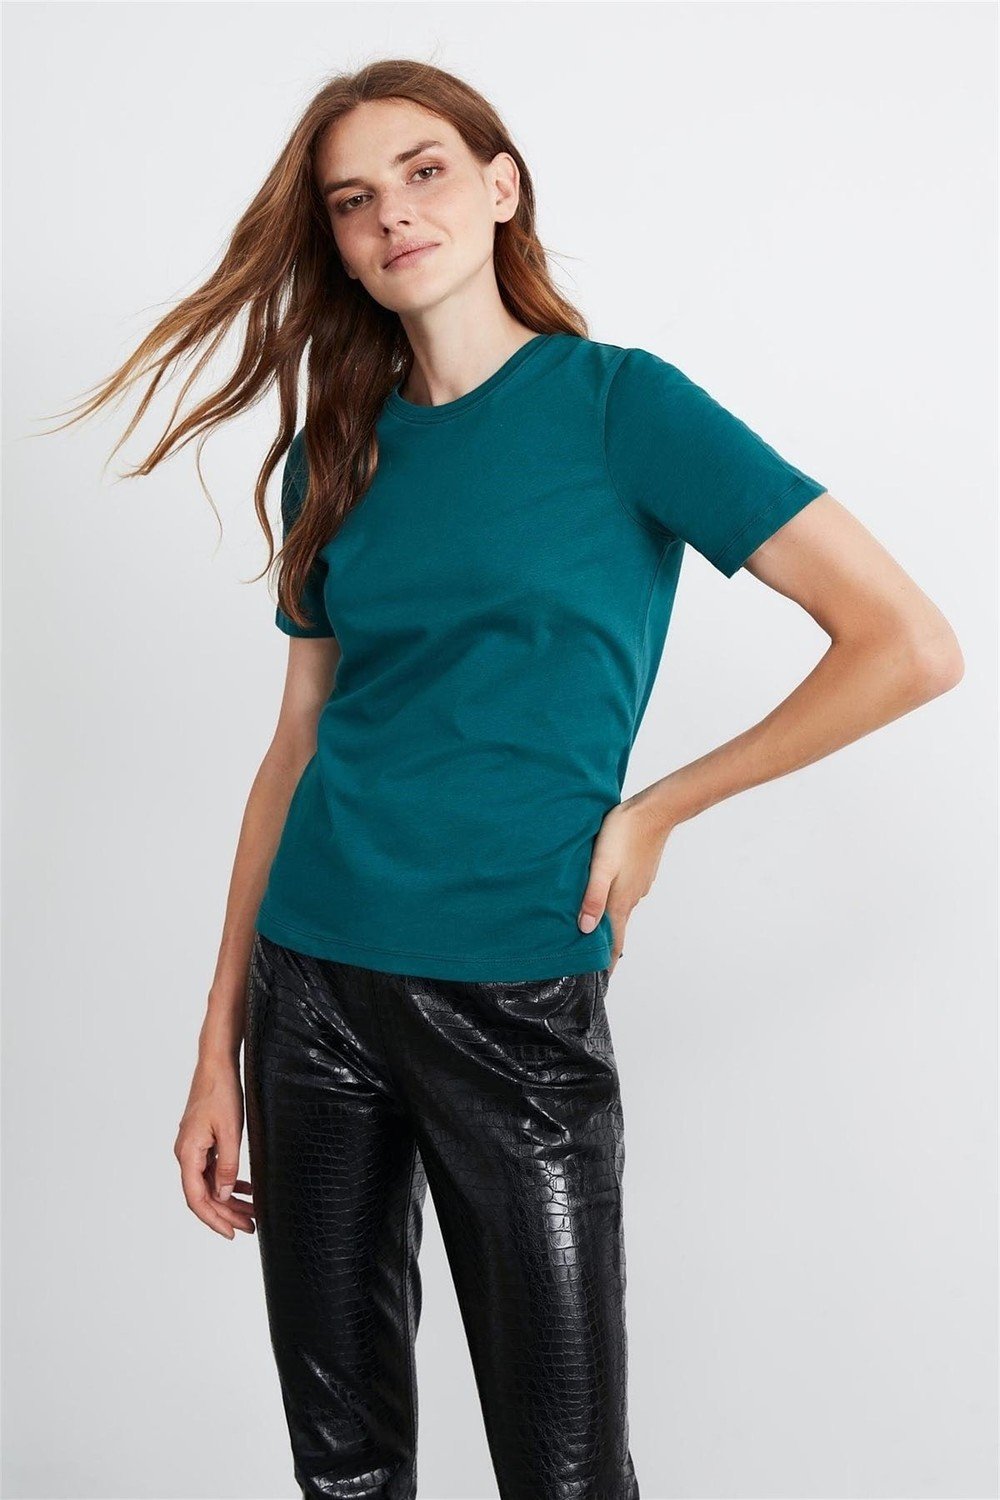 GRIMELANGE T-Shirt - Green - Relaxed fit